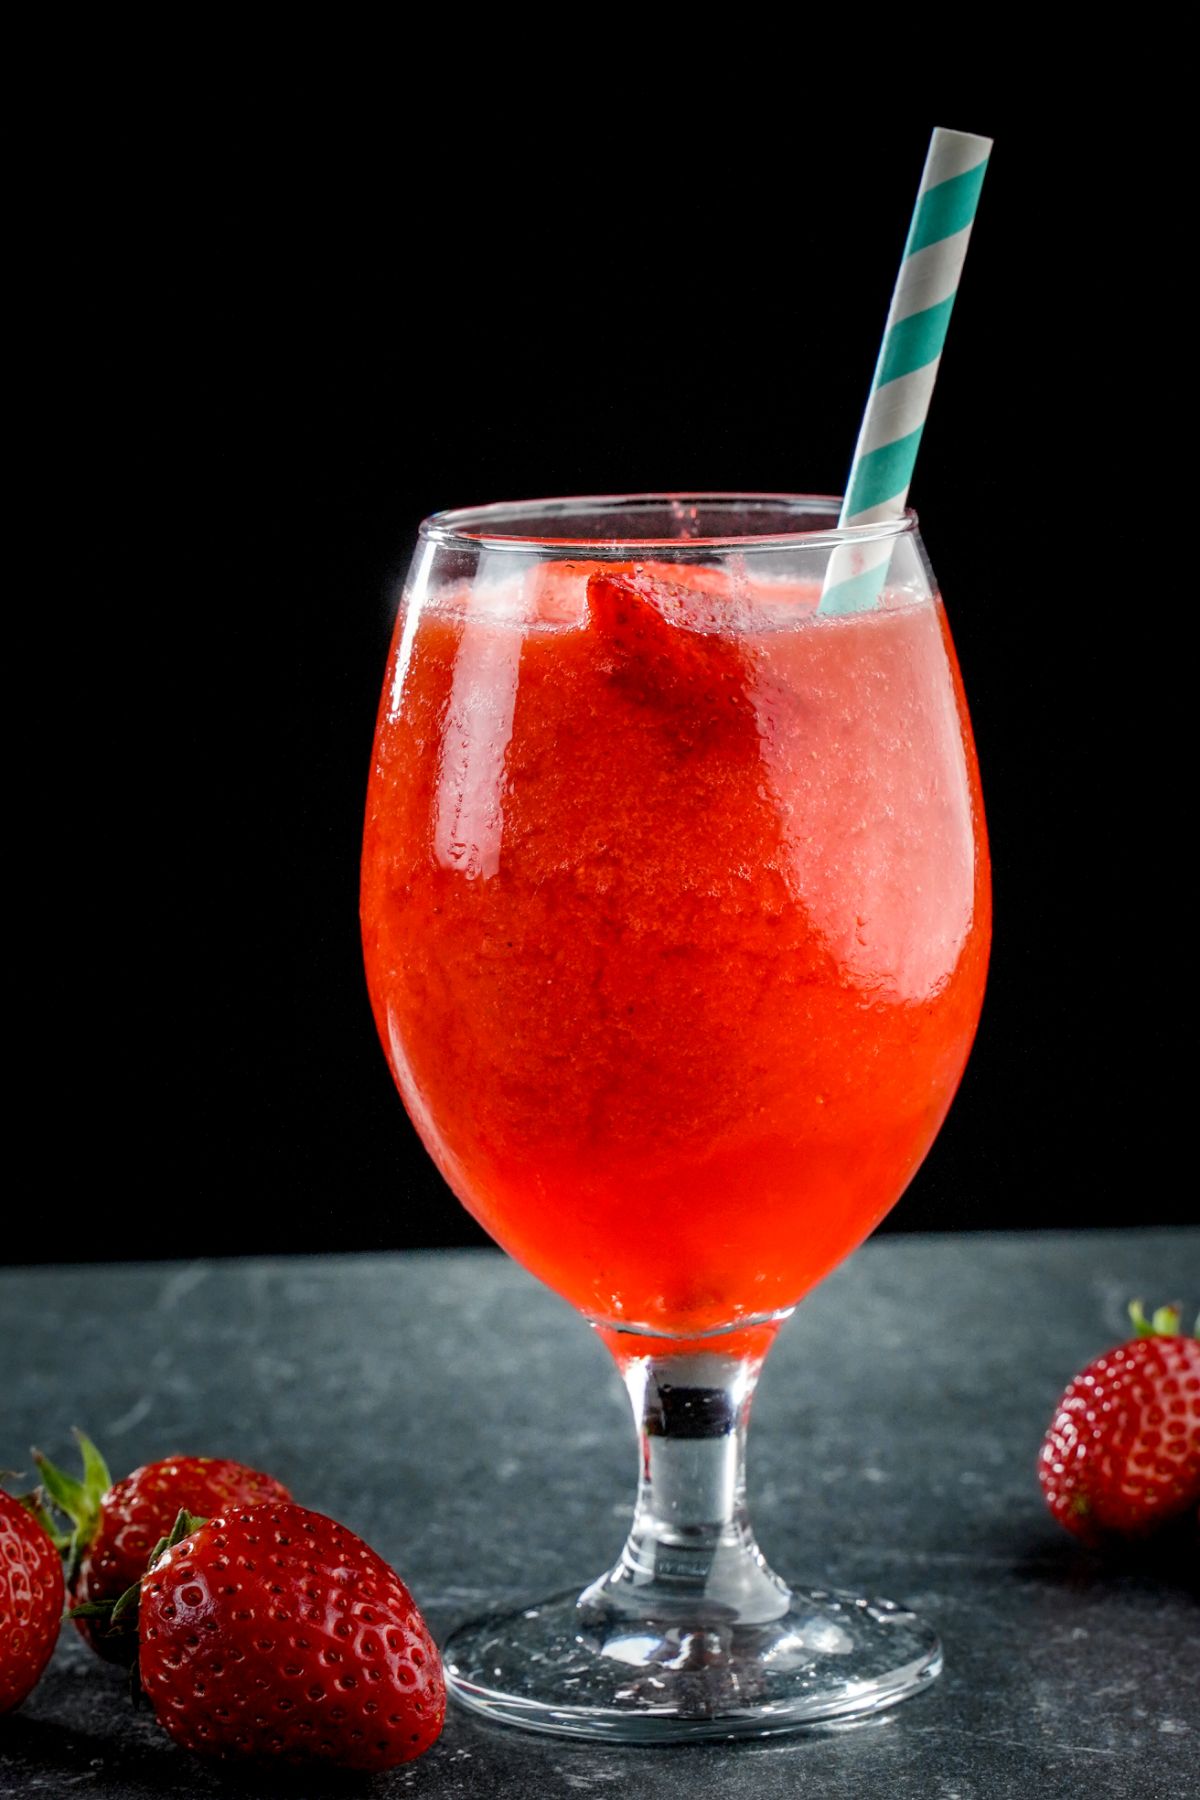 Strawberry daiquiri in a glass shot with a straw.